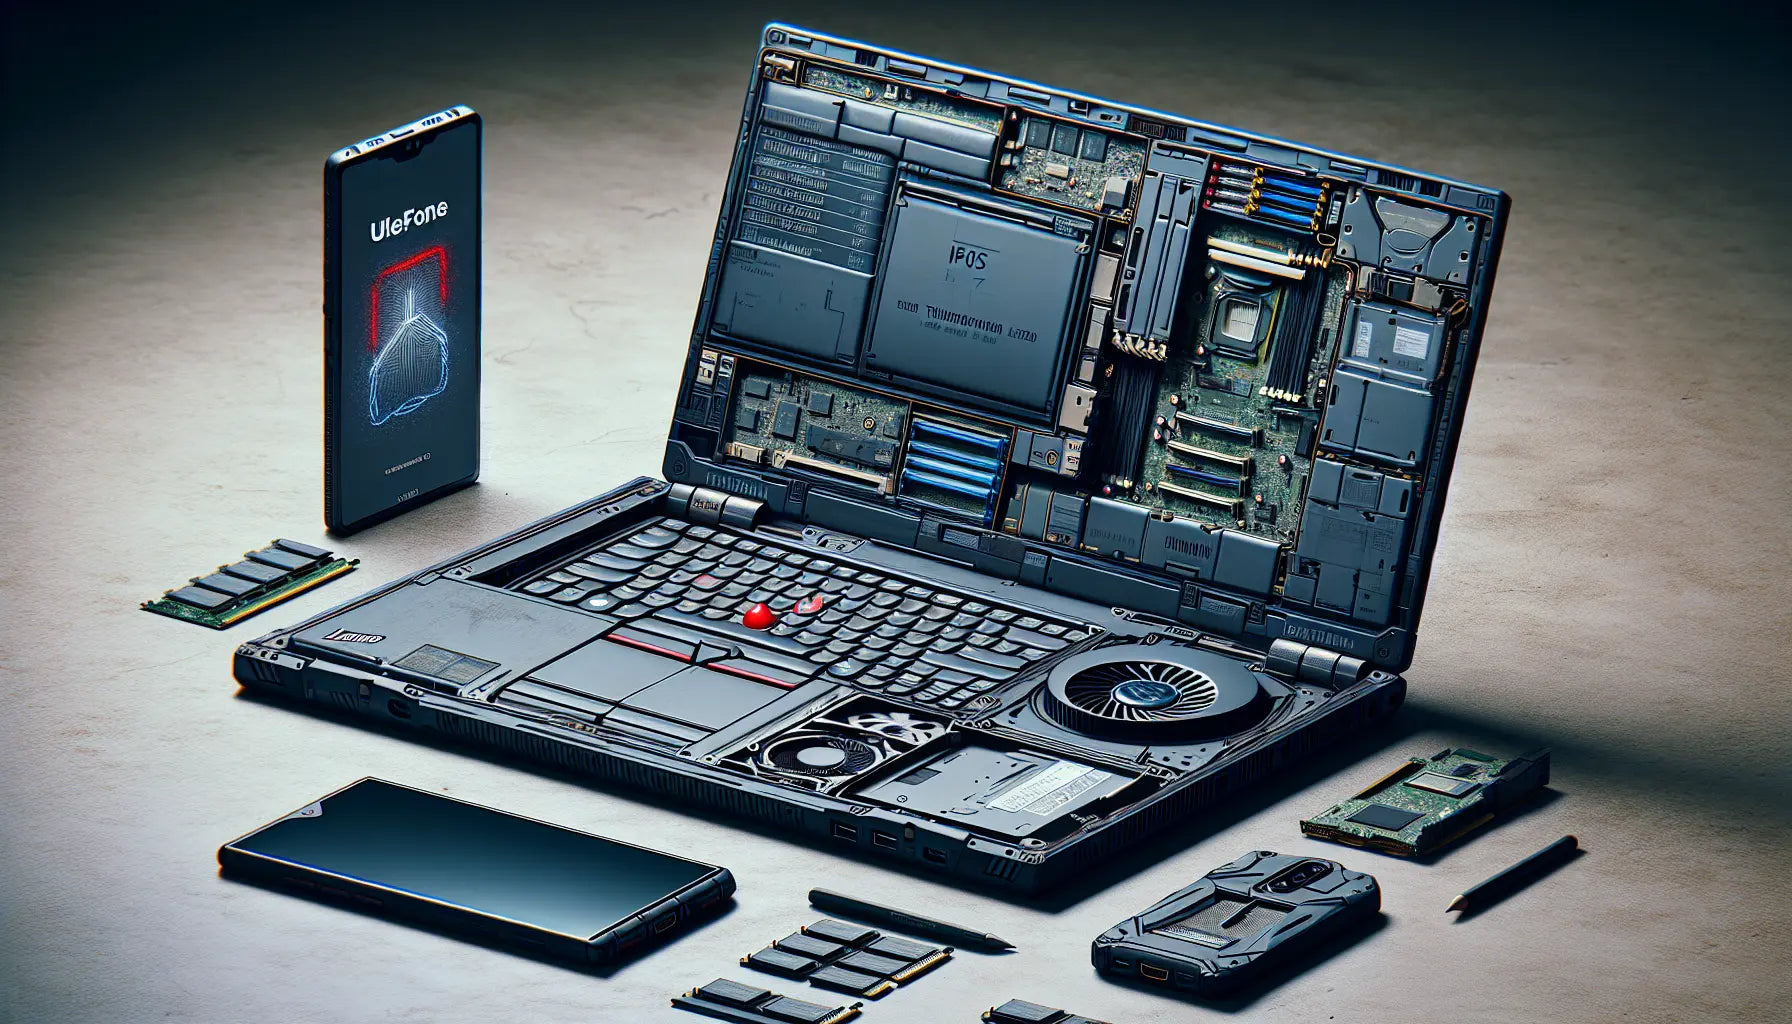 Lenovo ThinkPad P50s I7, 500GB, 16GB Ram Laptop: A Powerful Workhorse Still Relevant Today